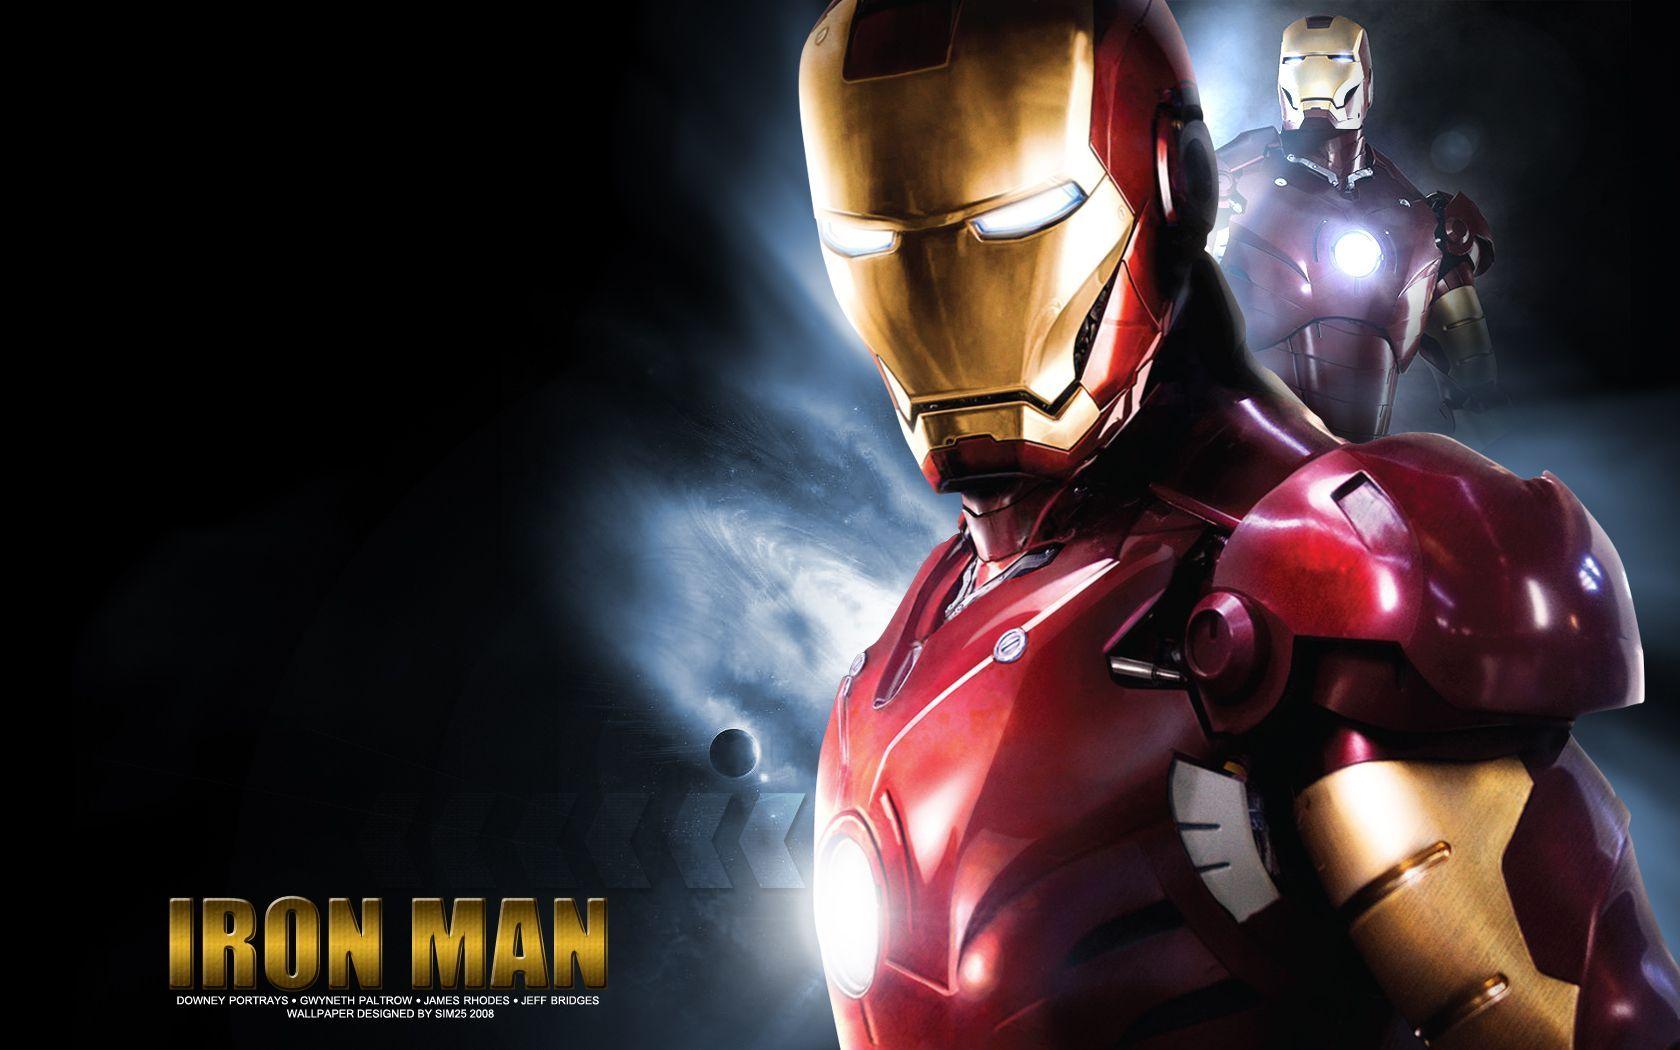 Free Iron Man Android Wallpaper Downloads 100 Iron Man Android  Wallpapers for FREE  Wallpaperscom